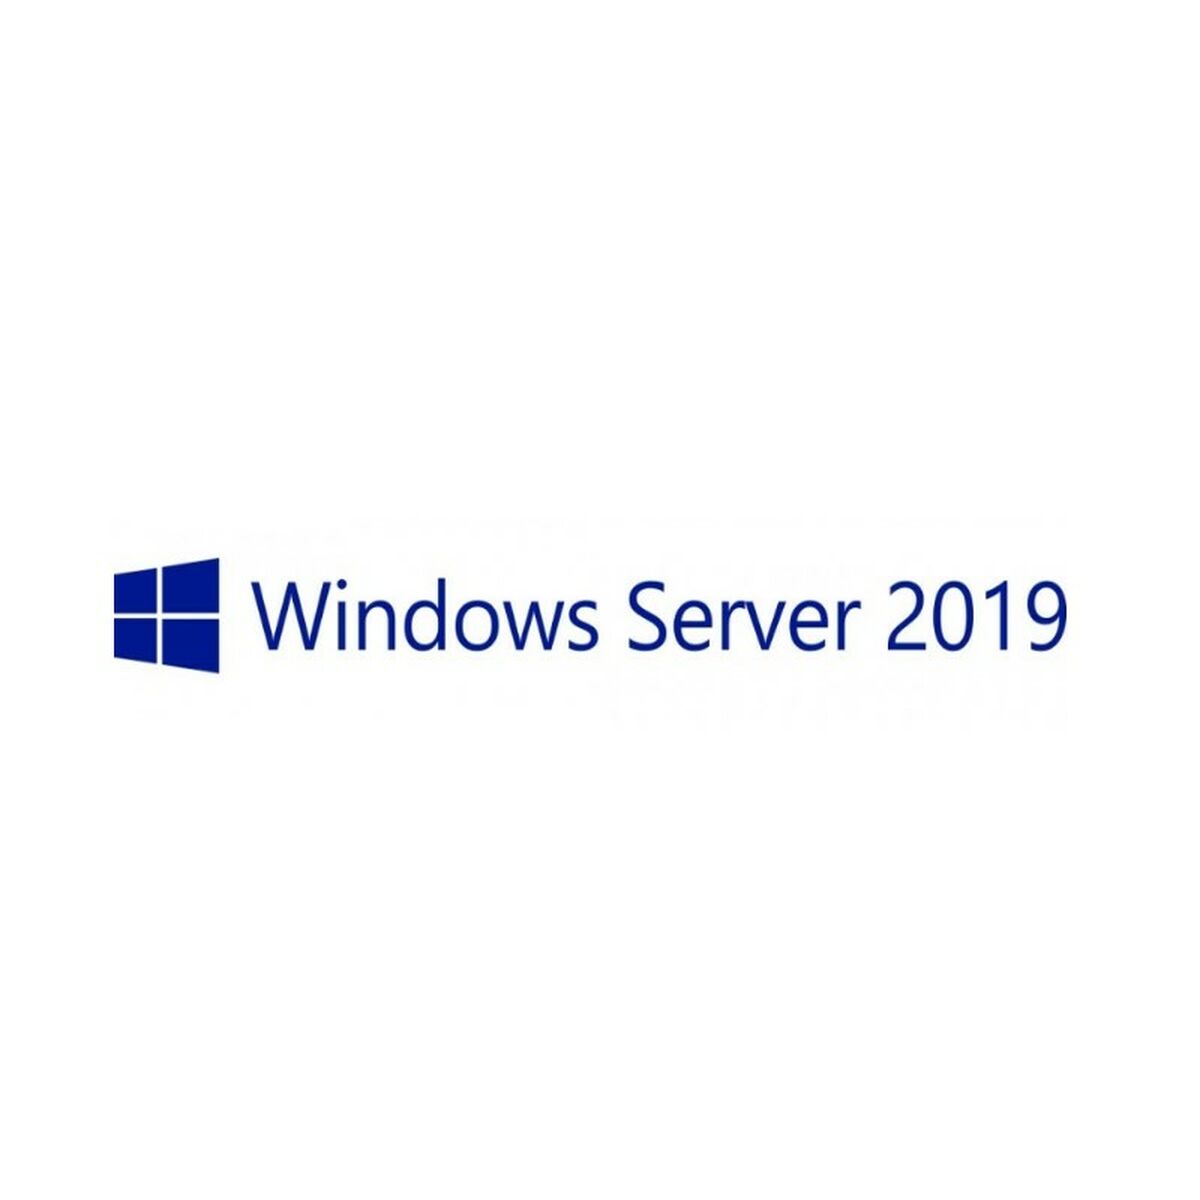 Microsoft Windows Server 2019 Microsoft P11077-A21 (5 Licences)